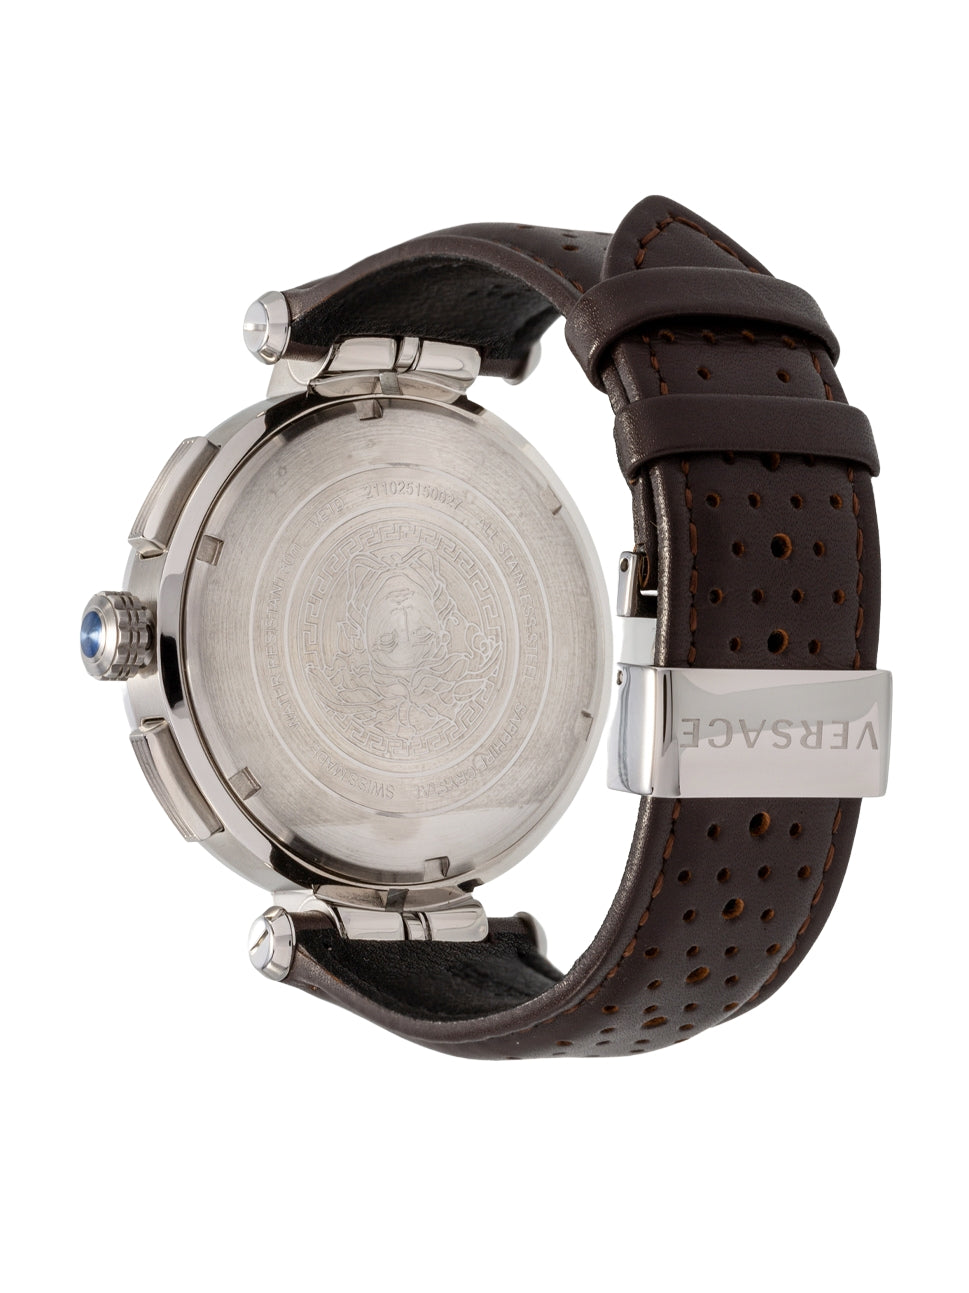 Versace Men's Aion Chronograph Watch VE1D00119 Silver Brown